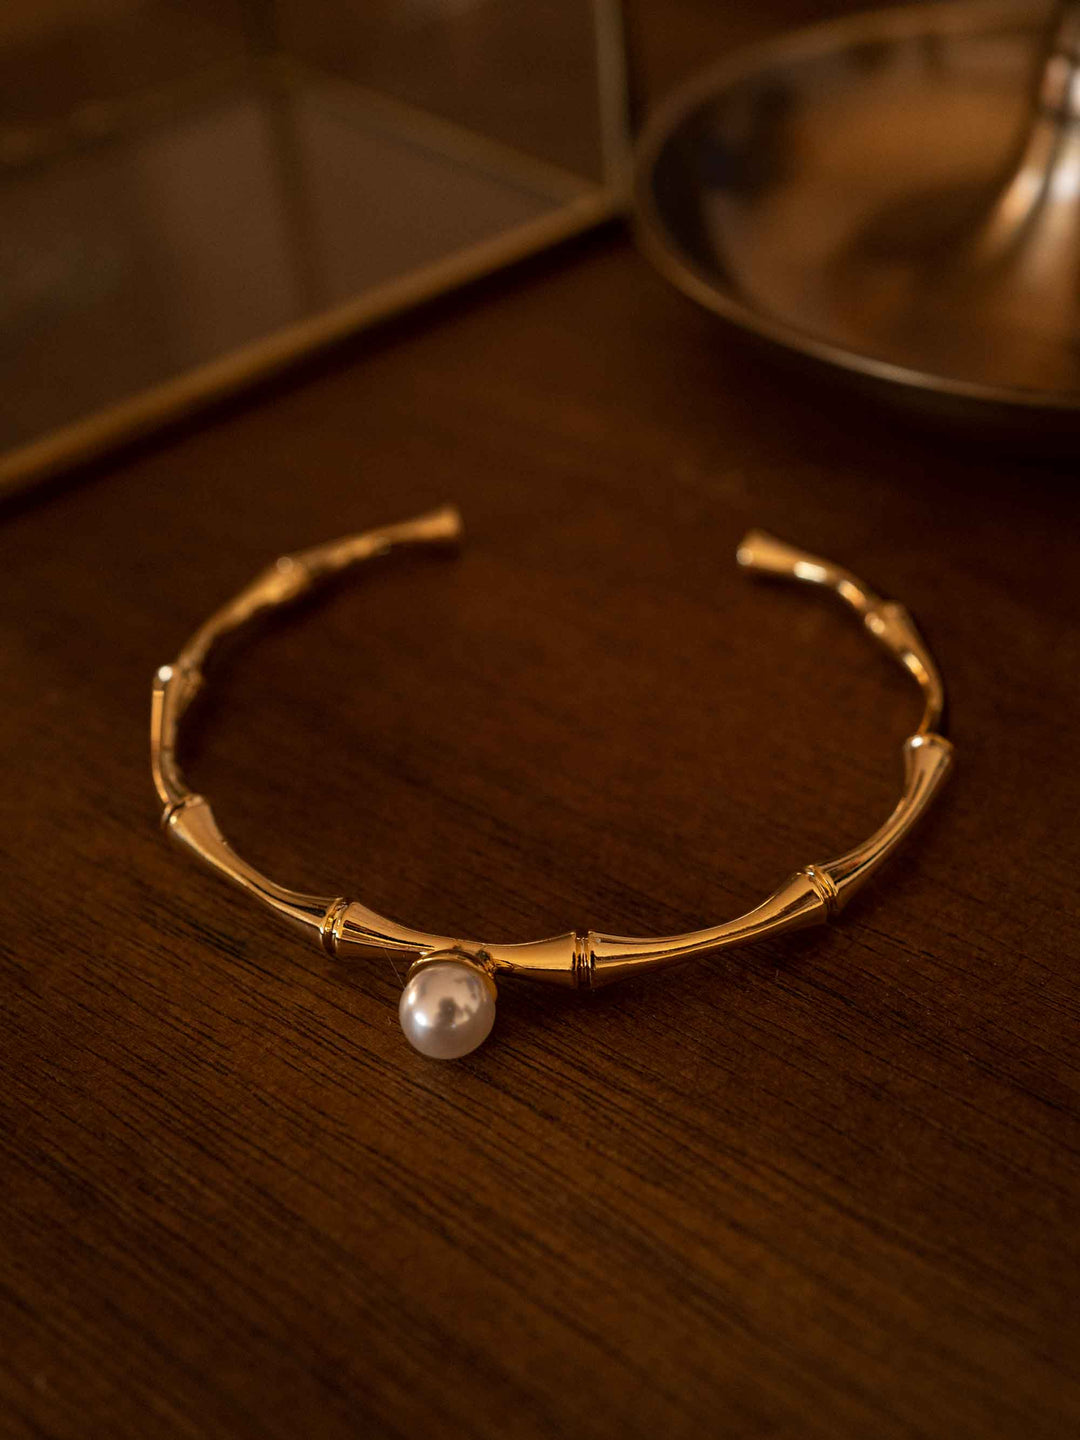 A bamboo-shaped gold bracelet